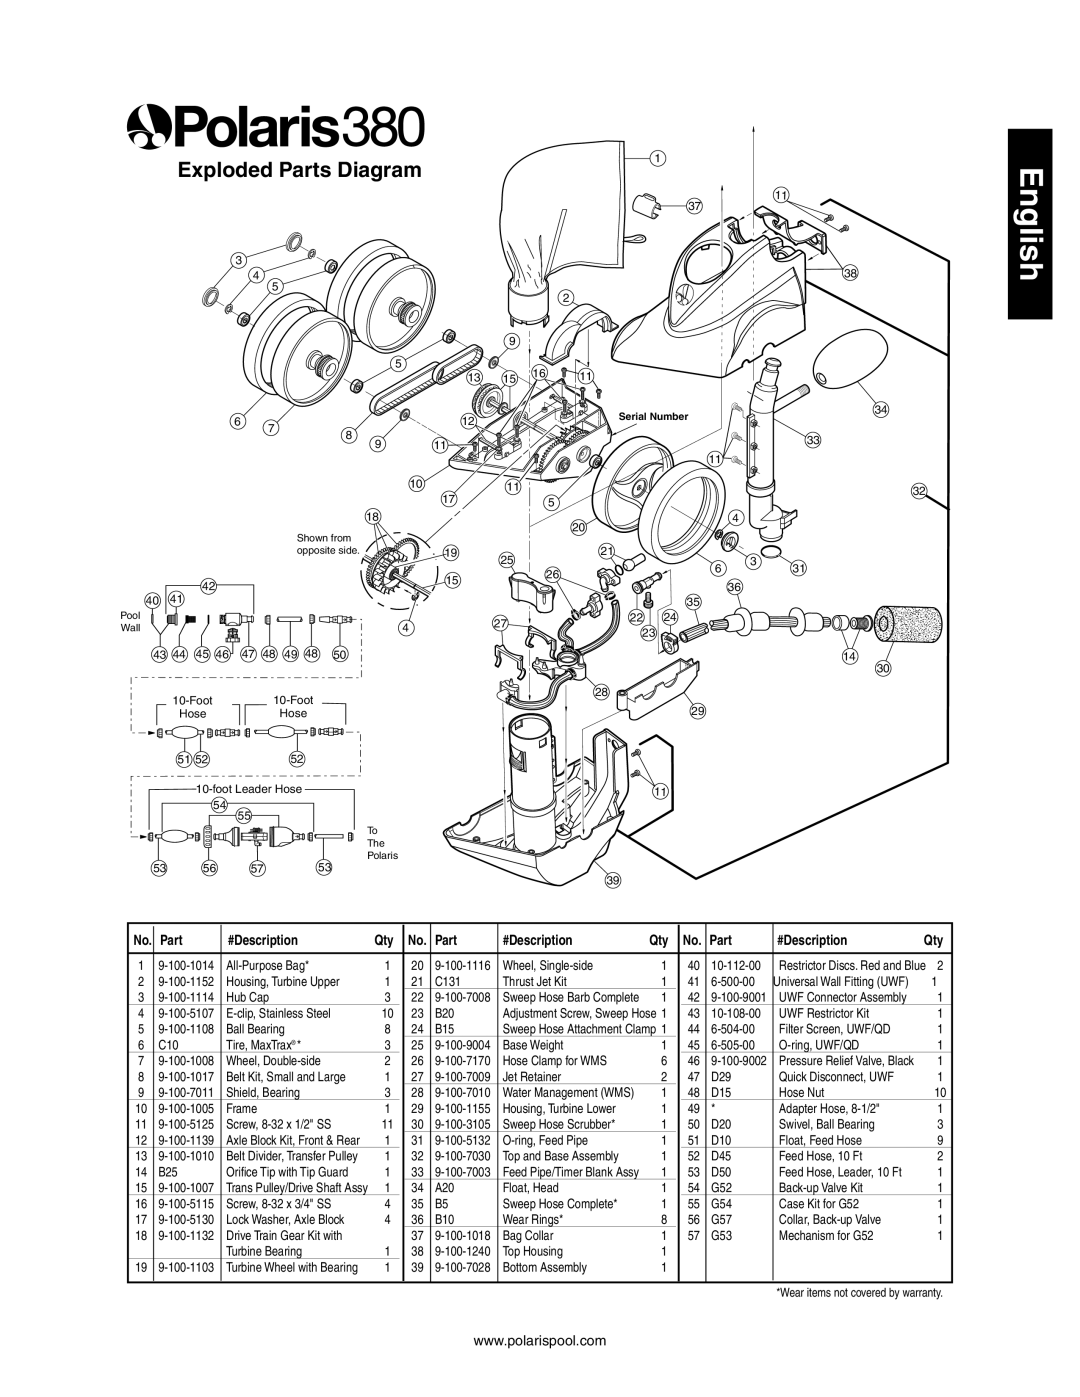 Polaris 380 owner manual Exploded Parts Diagram, English, #Description 